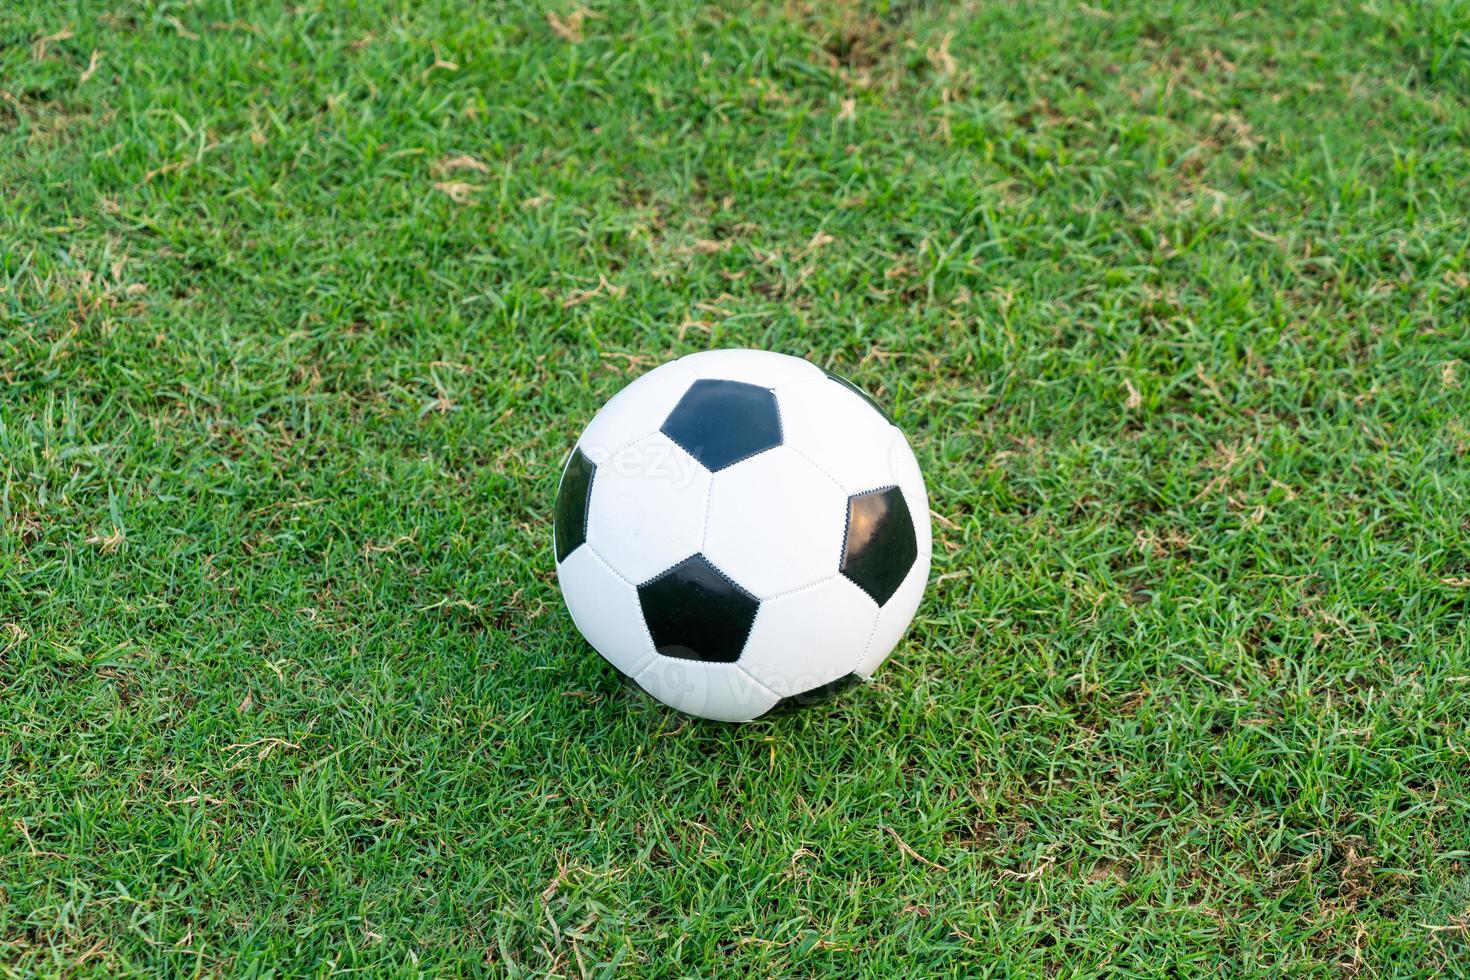 Soccer ball on the ball field photo